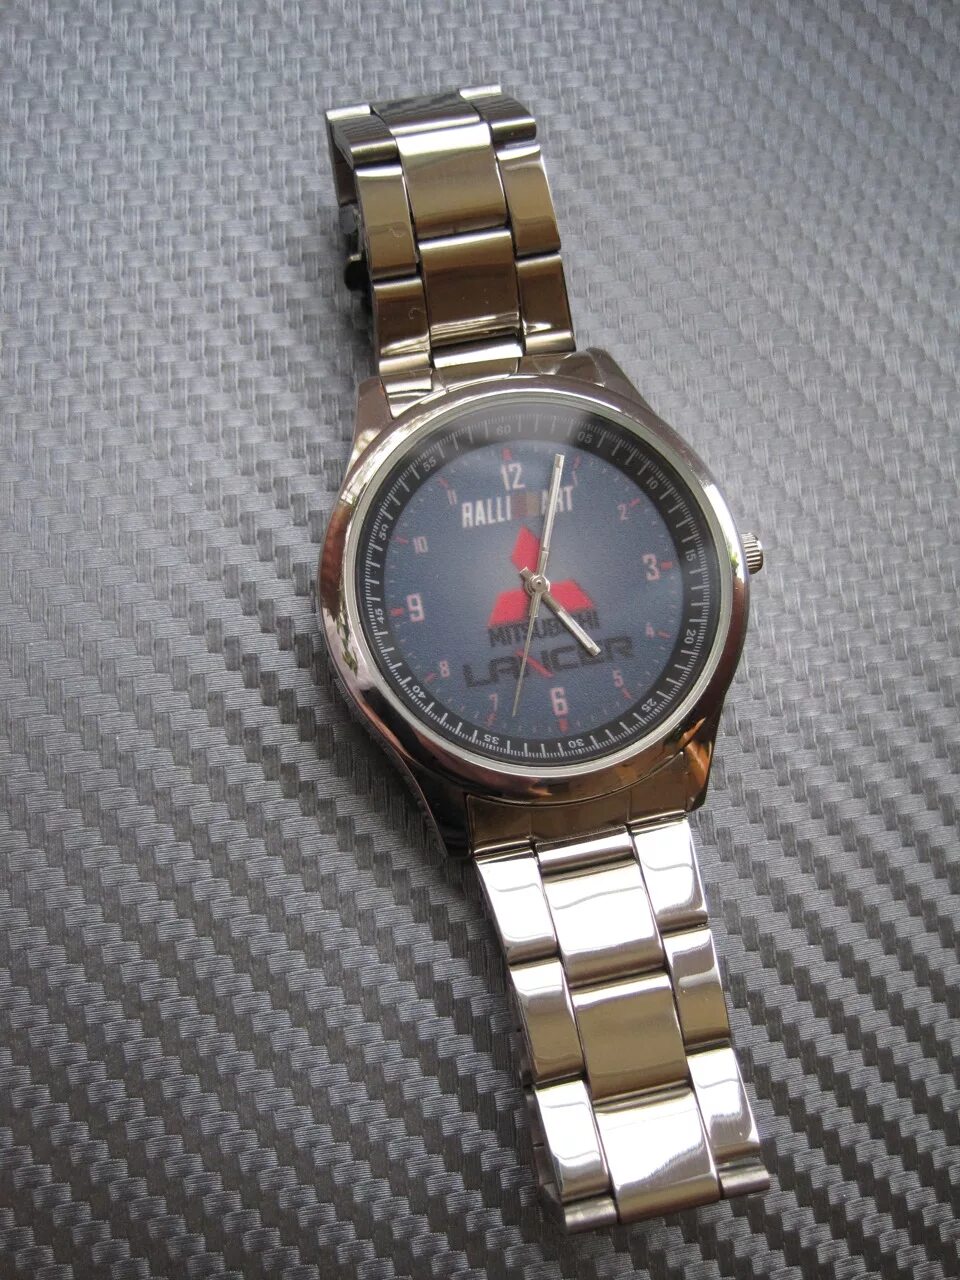 Mitsubishi час. Swiss Mitsubishi часы. Часы Mitsubishi 7590/316 наручные. Наручные часы Mitsubishi ru000006. Часы Митсубиси Восток.